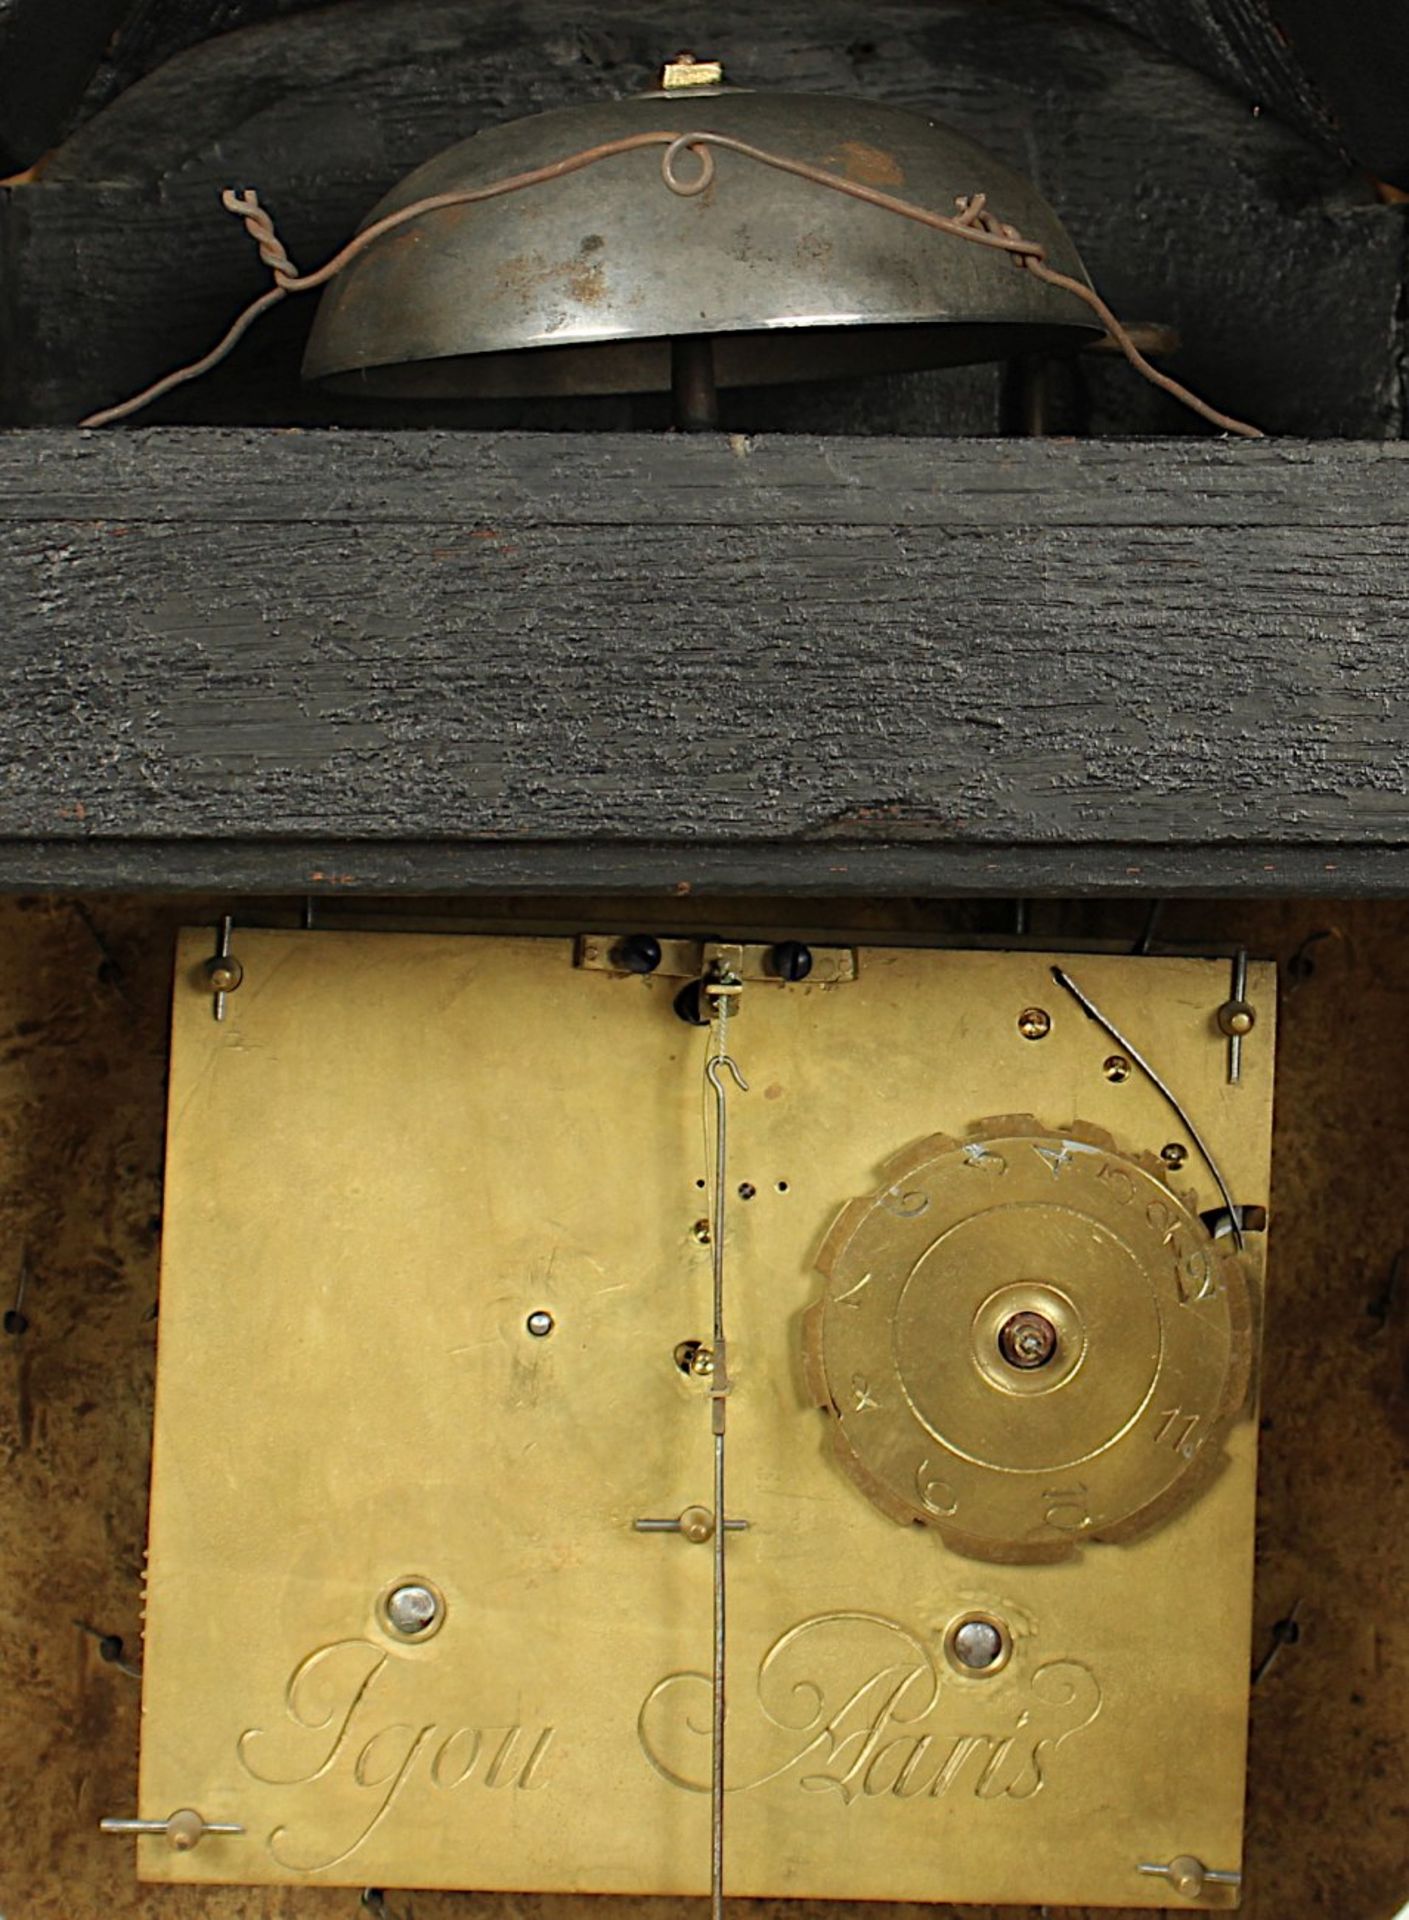 GROSSE LOUIS-XIV-KONSOLPENDULE, sogenannte "Religieuse", Gehäuseverzierung in Boulle-Technik, besch. - Image 7 of 7